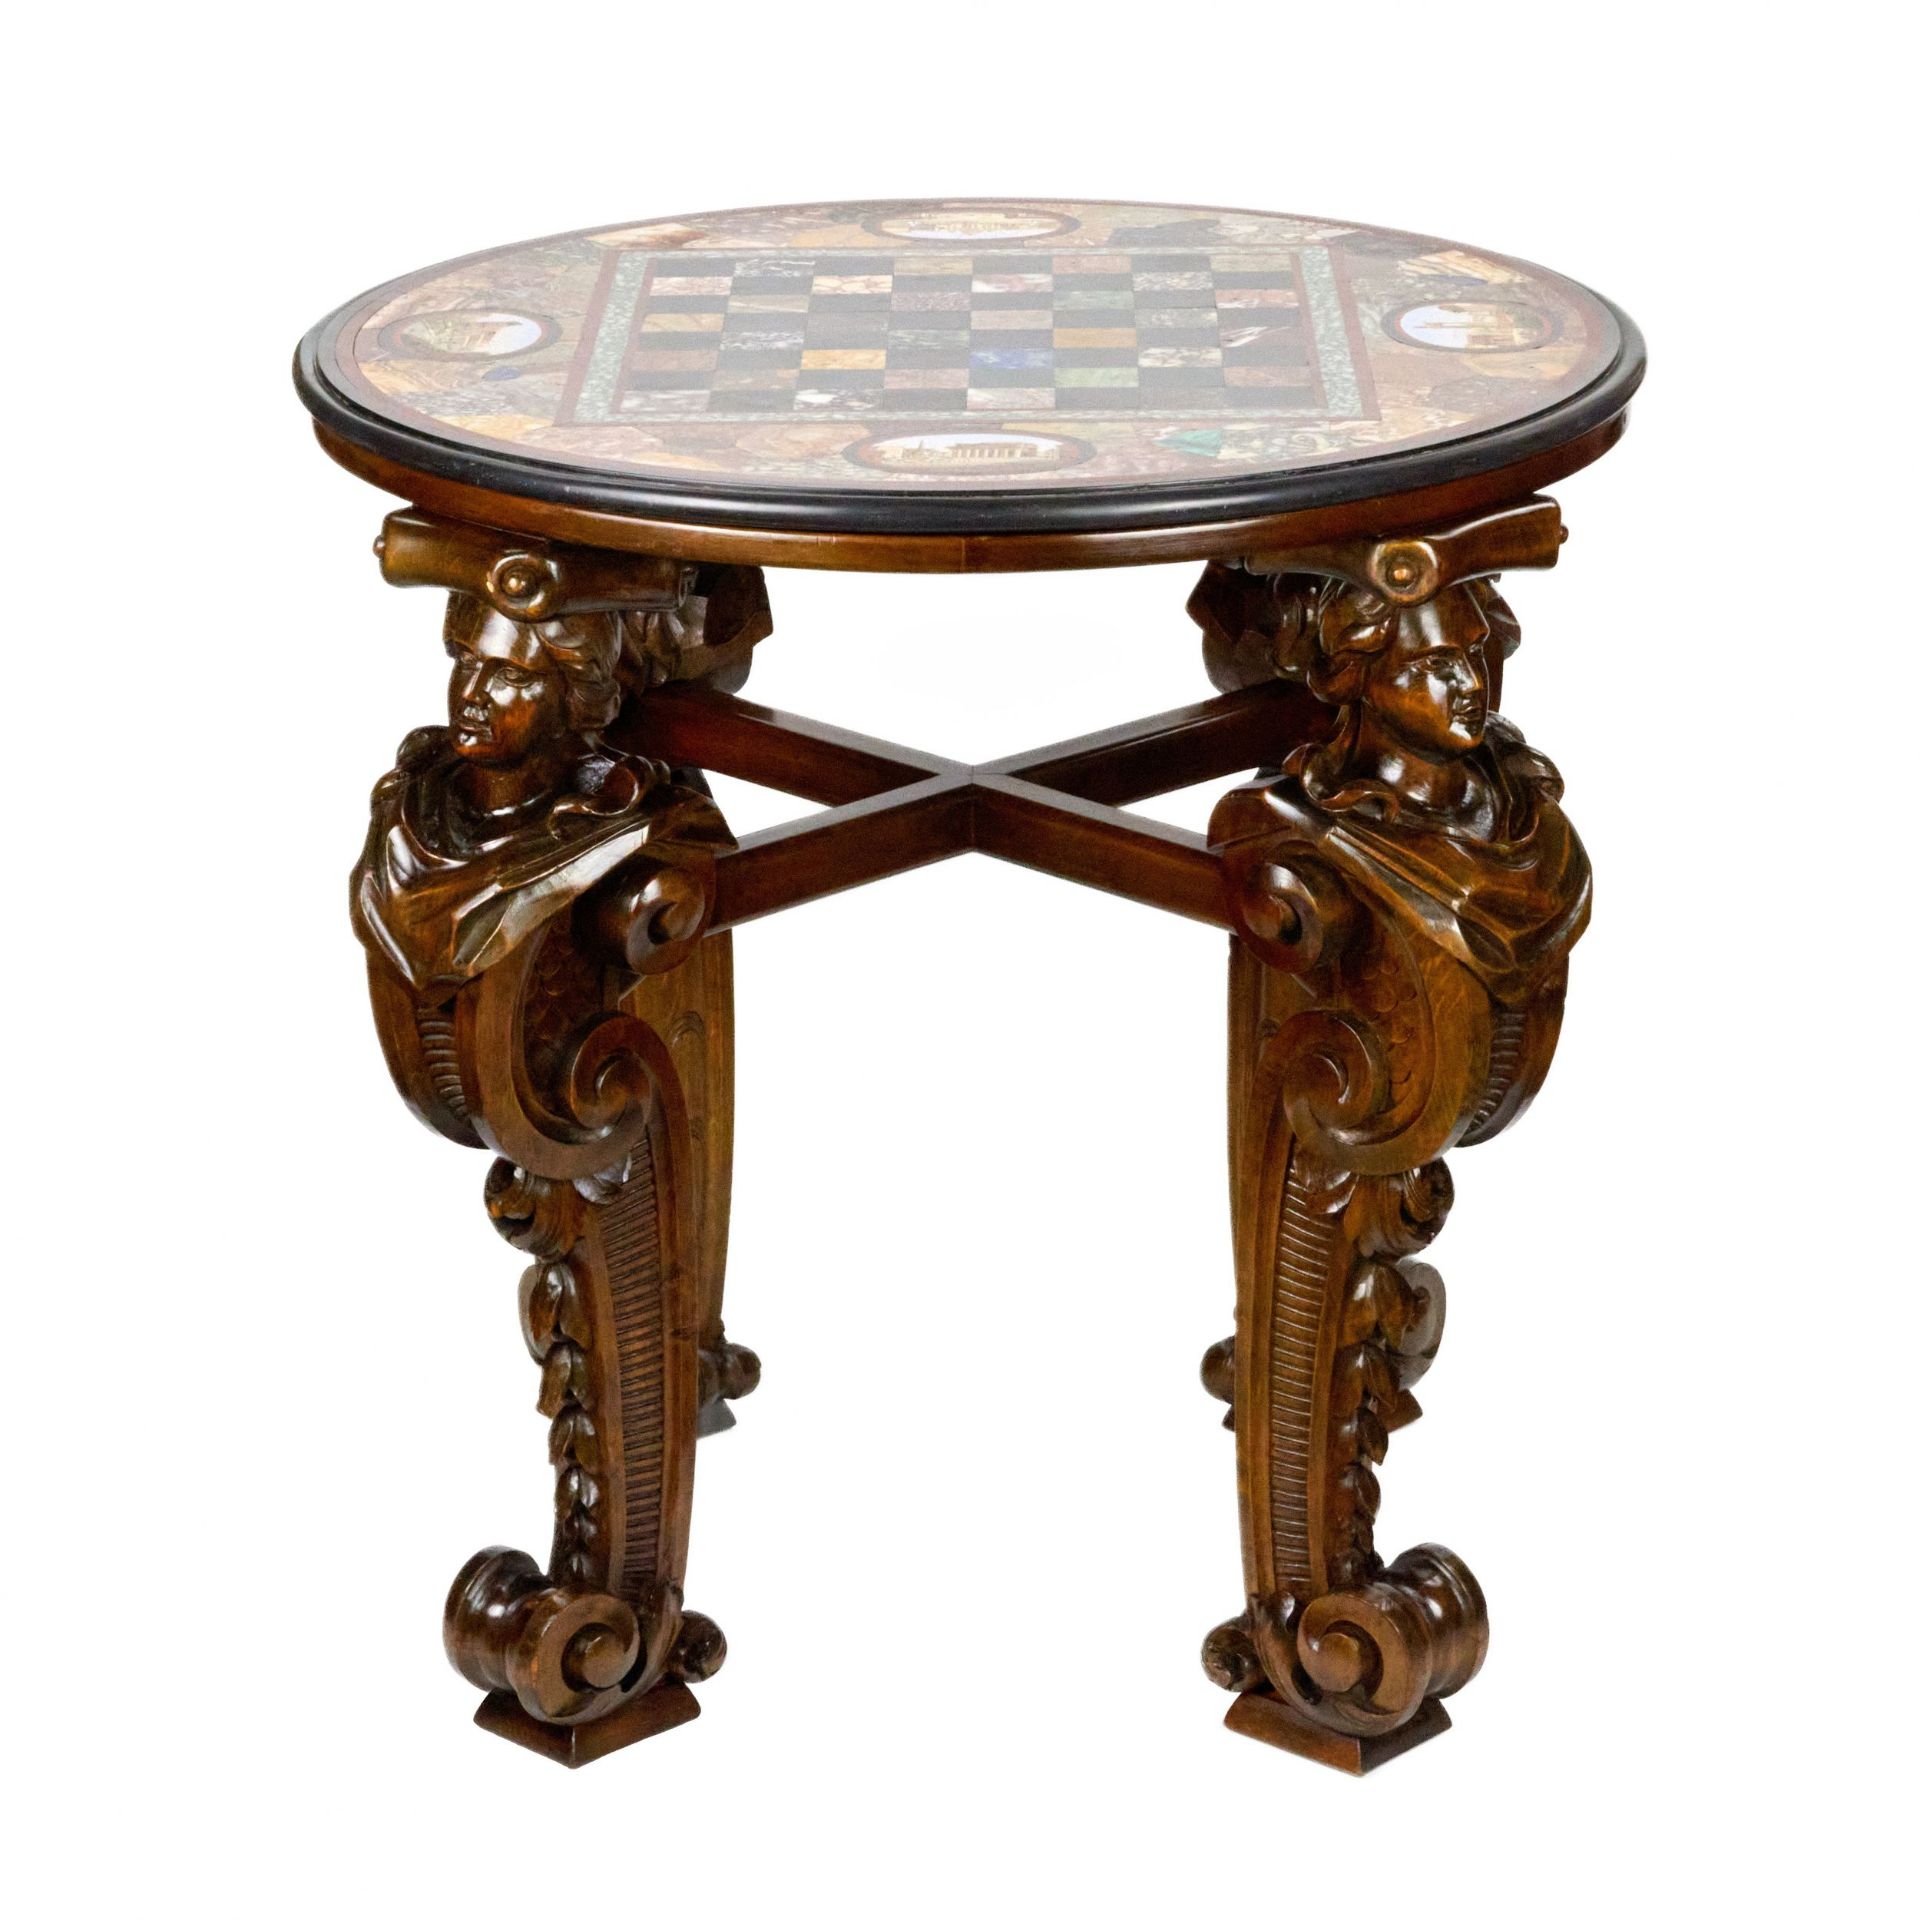 An impressive chess table with precious Roman mosaics on carved legs. - Bild 2 aus 10